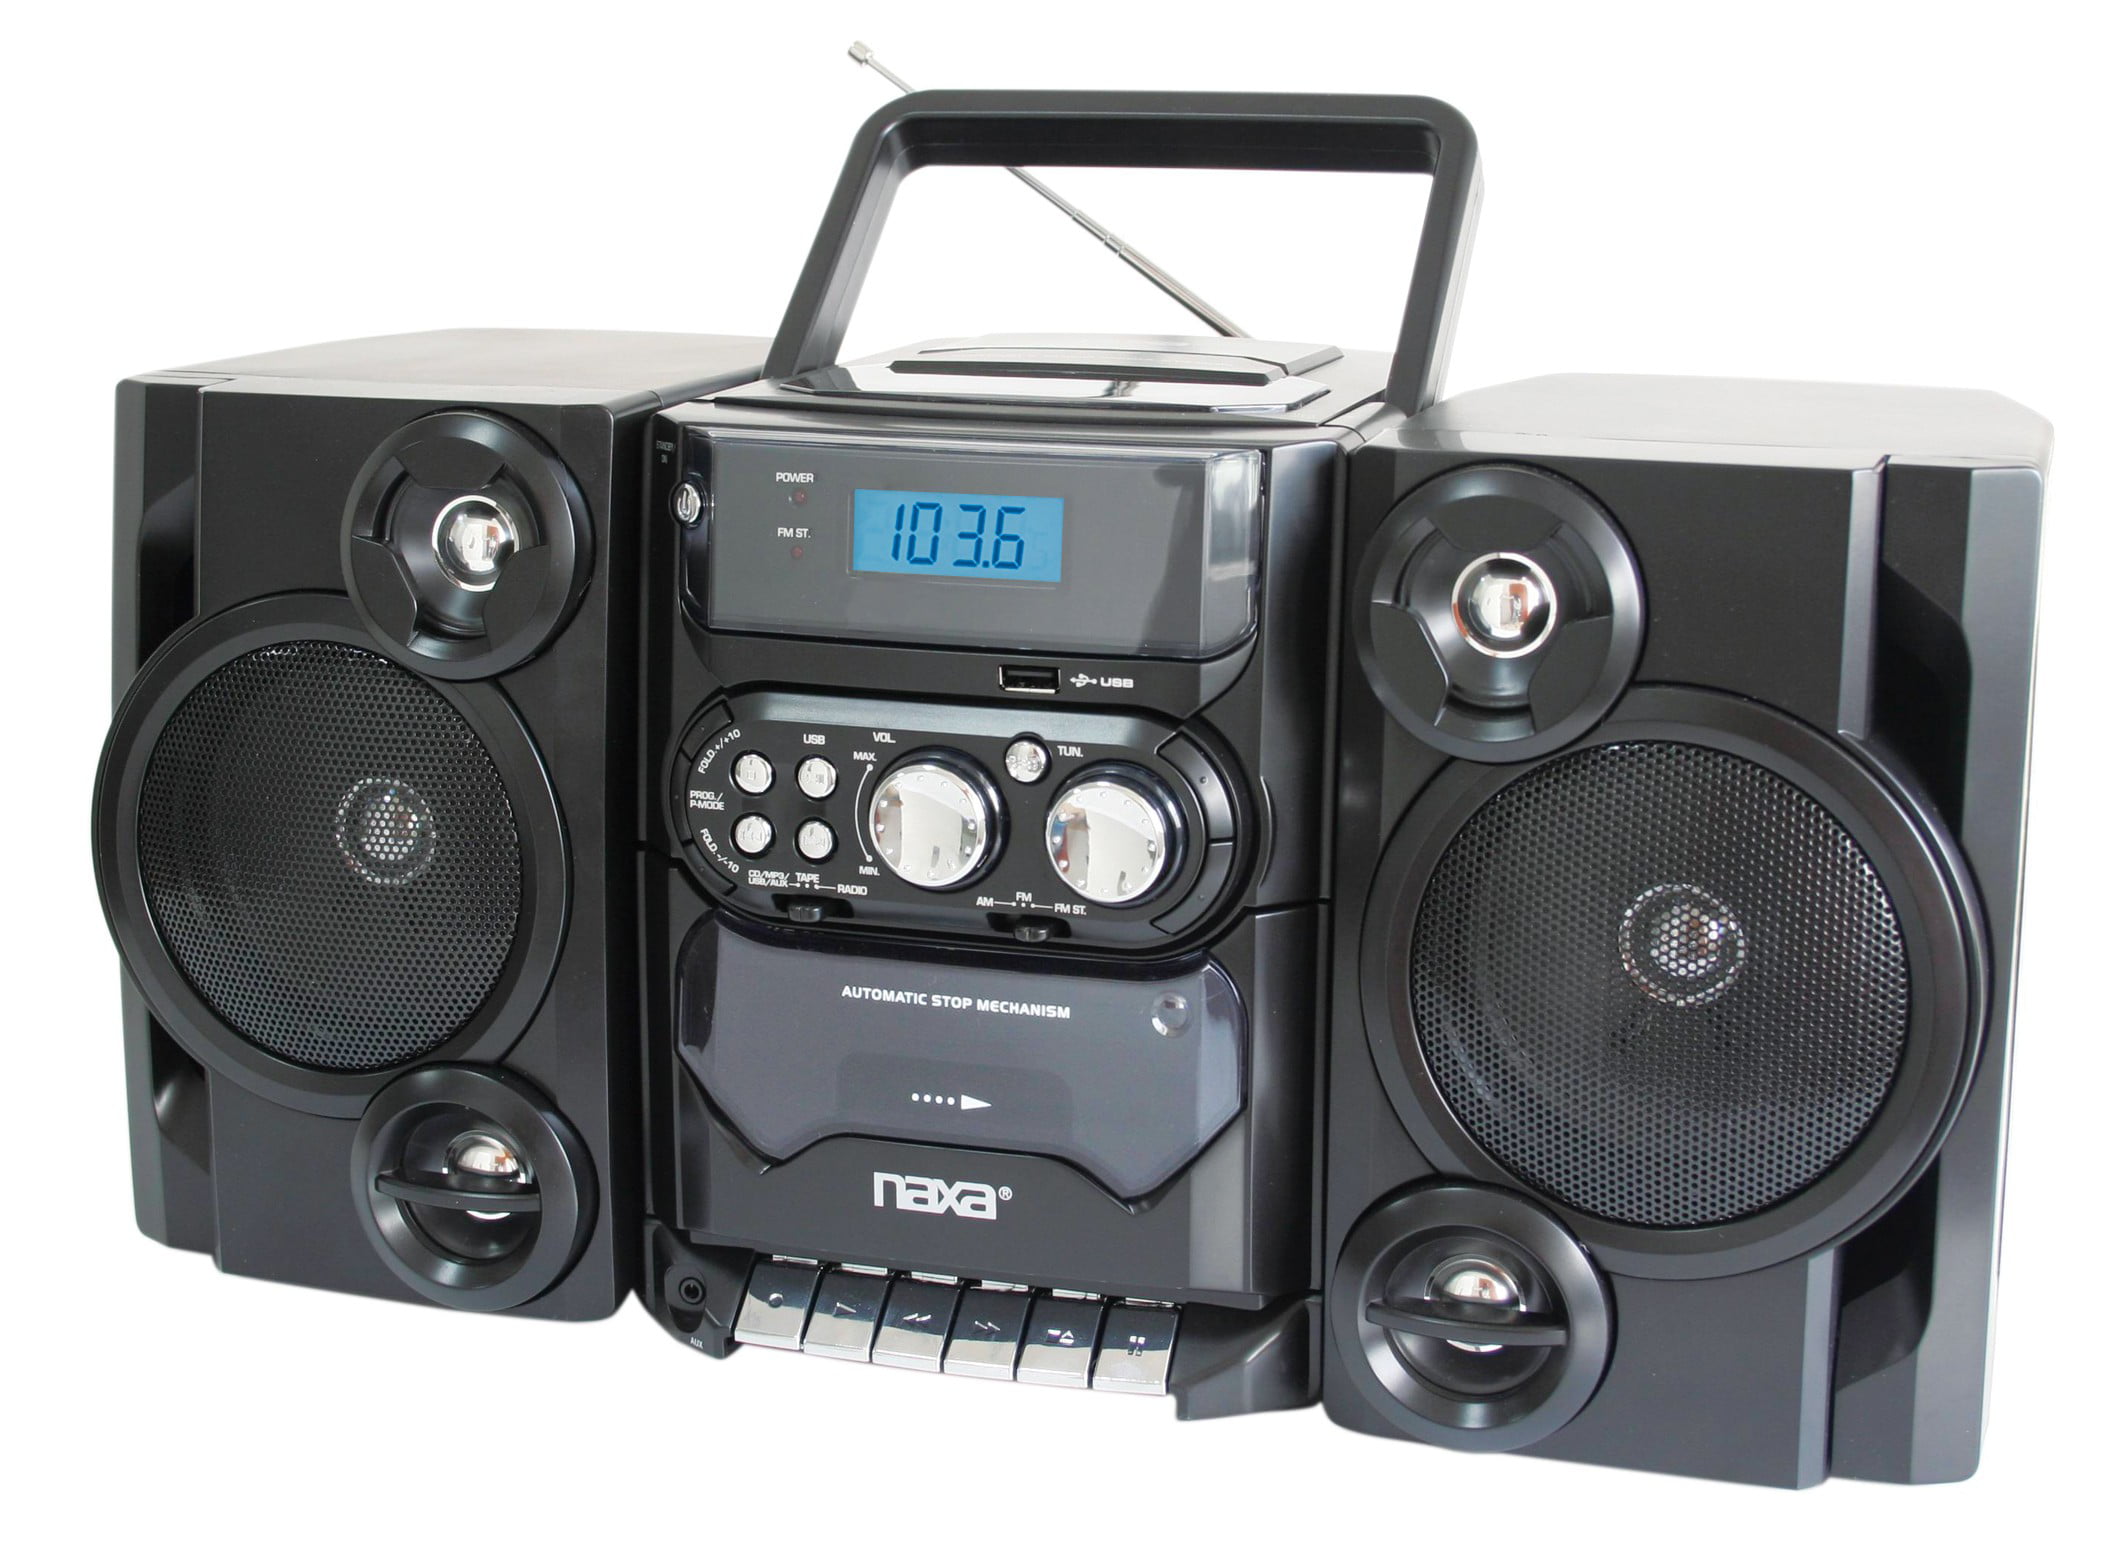 Naxa Npb428 Portable Cd Mp3 Player With Am Fm Radio Detachable